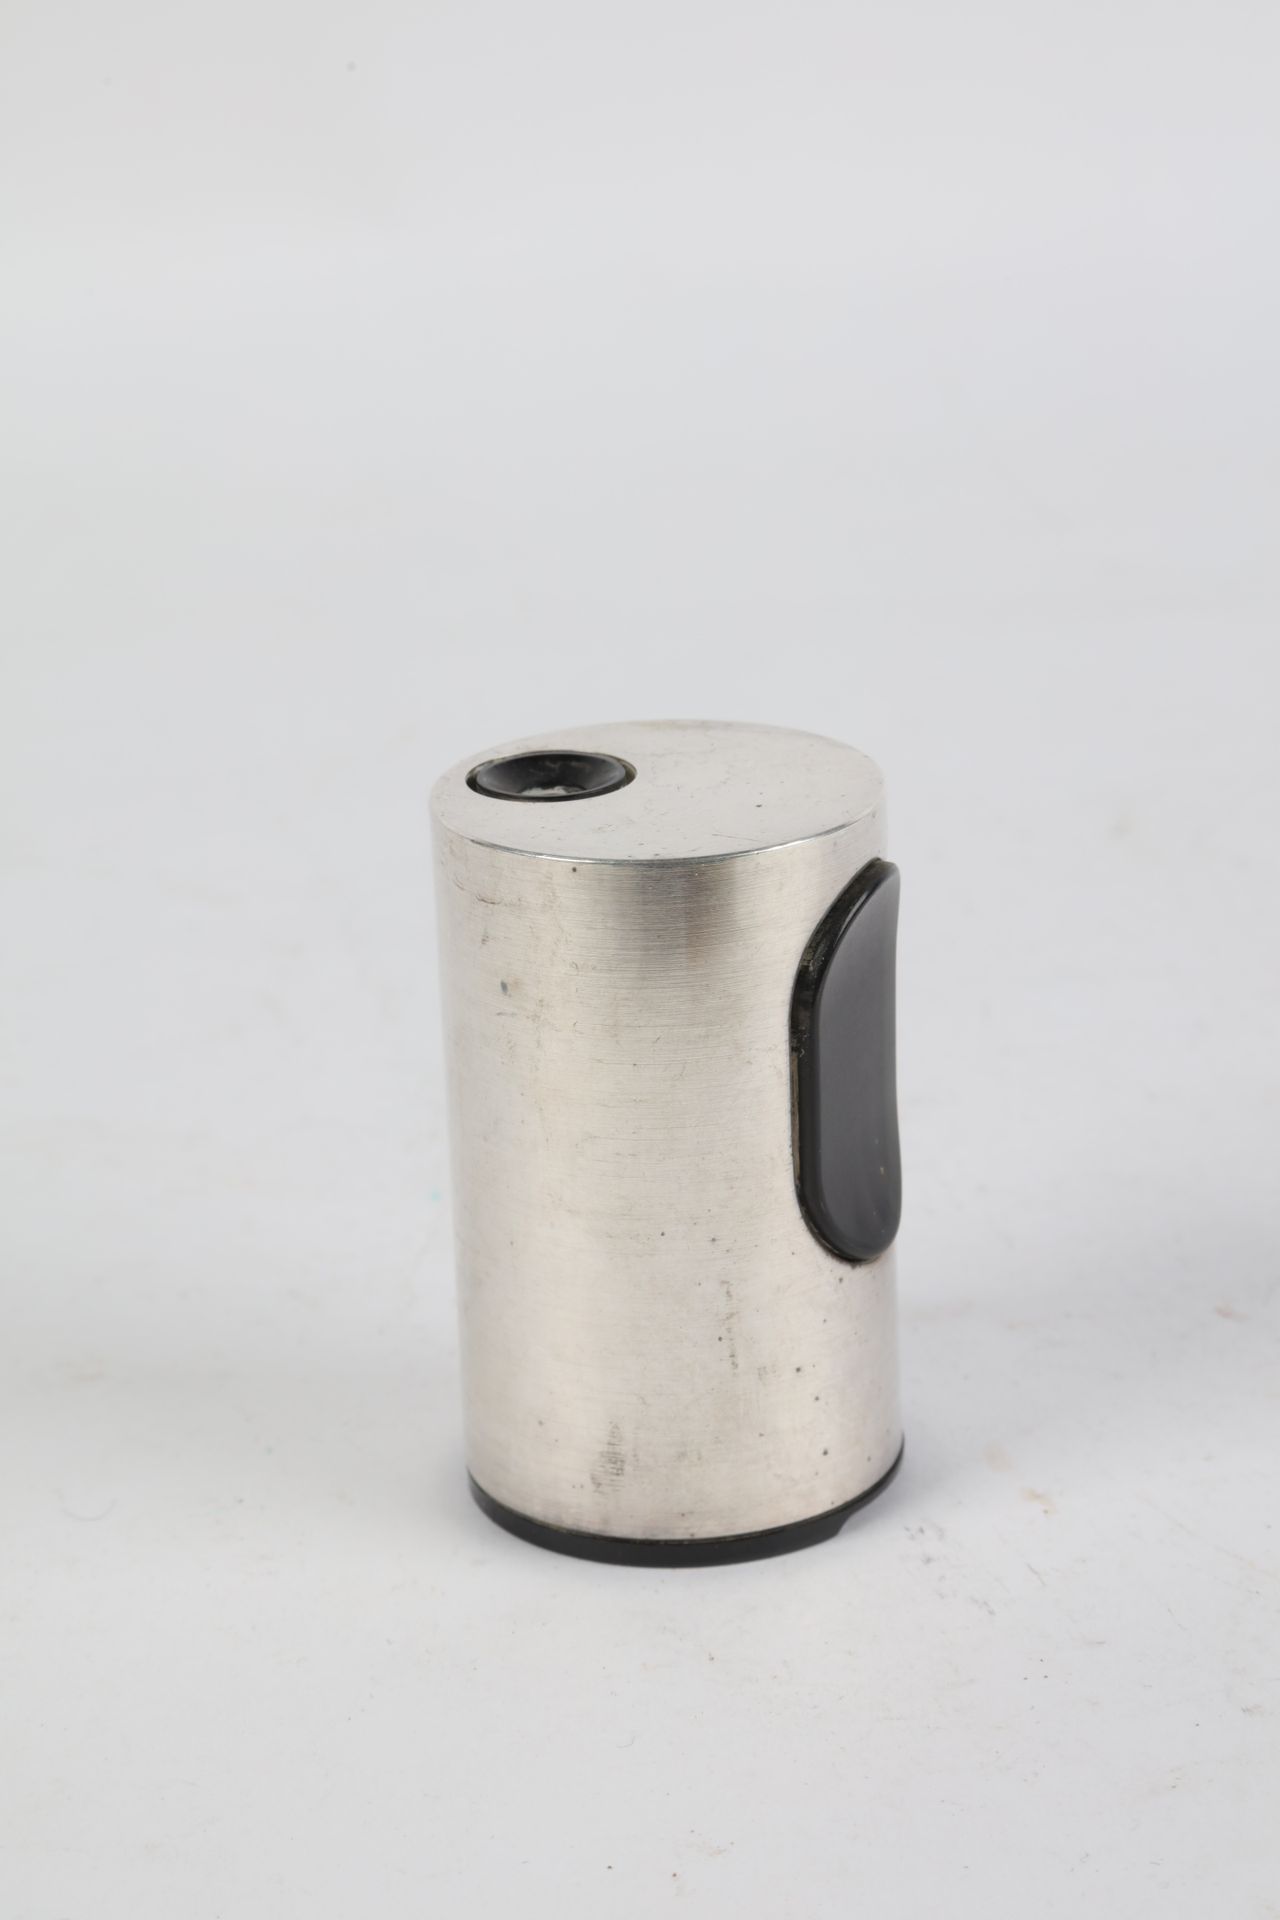 Null Braun, briquet en métal argenté. 8,5X5